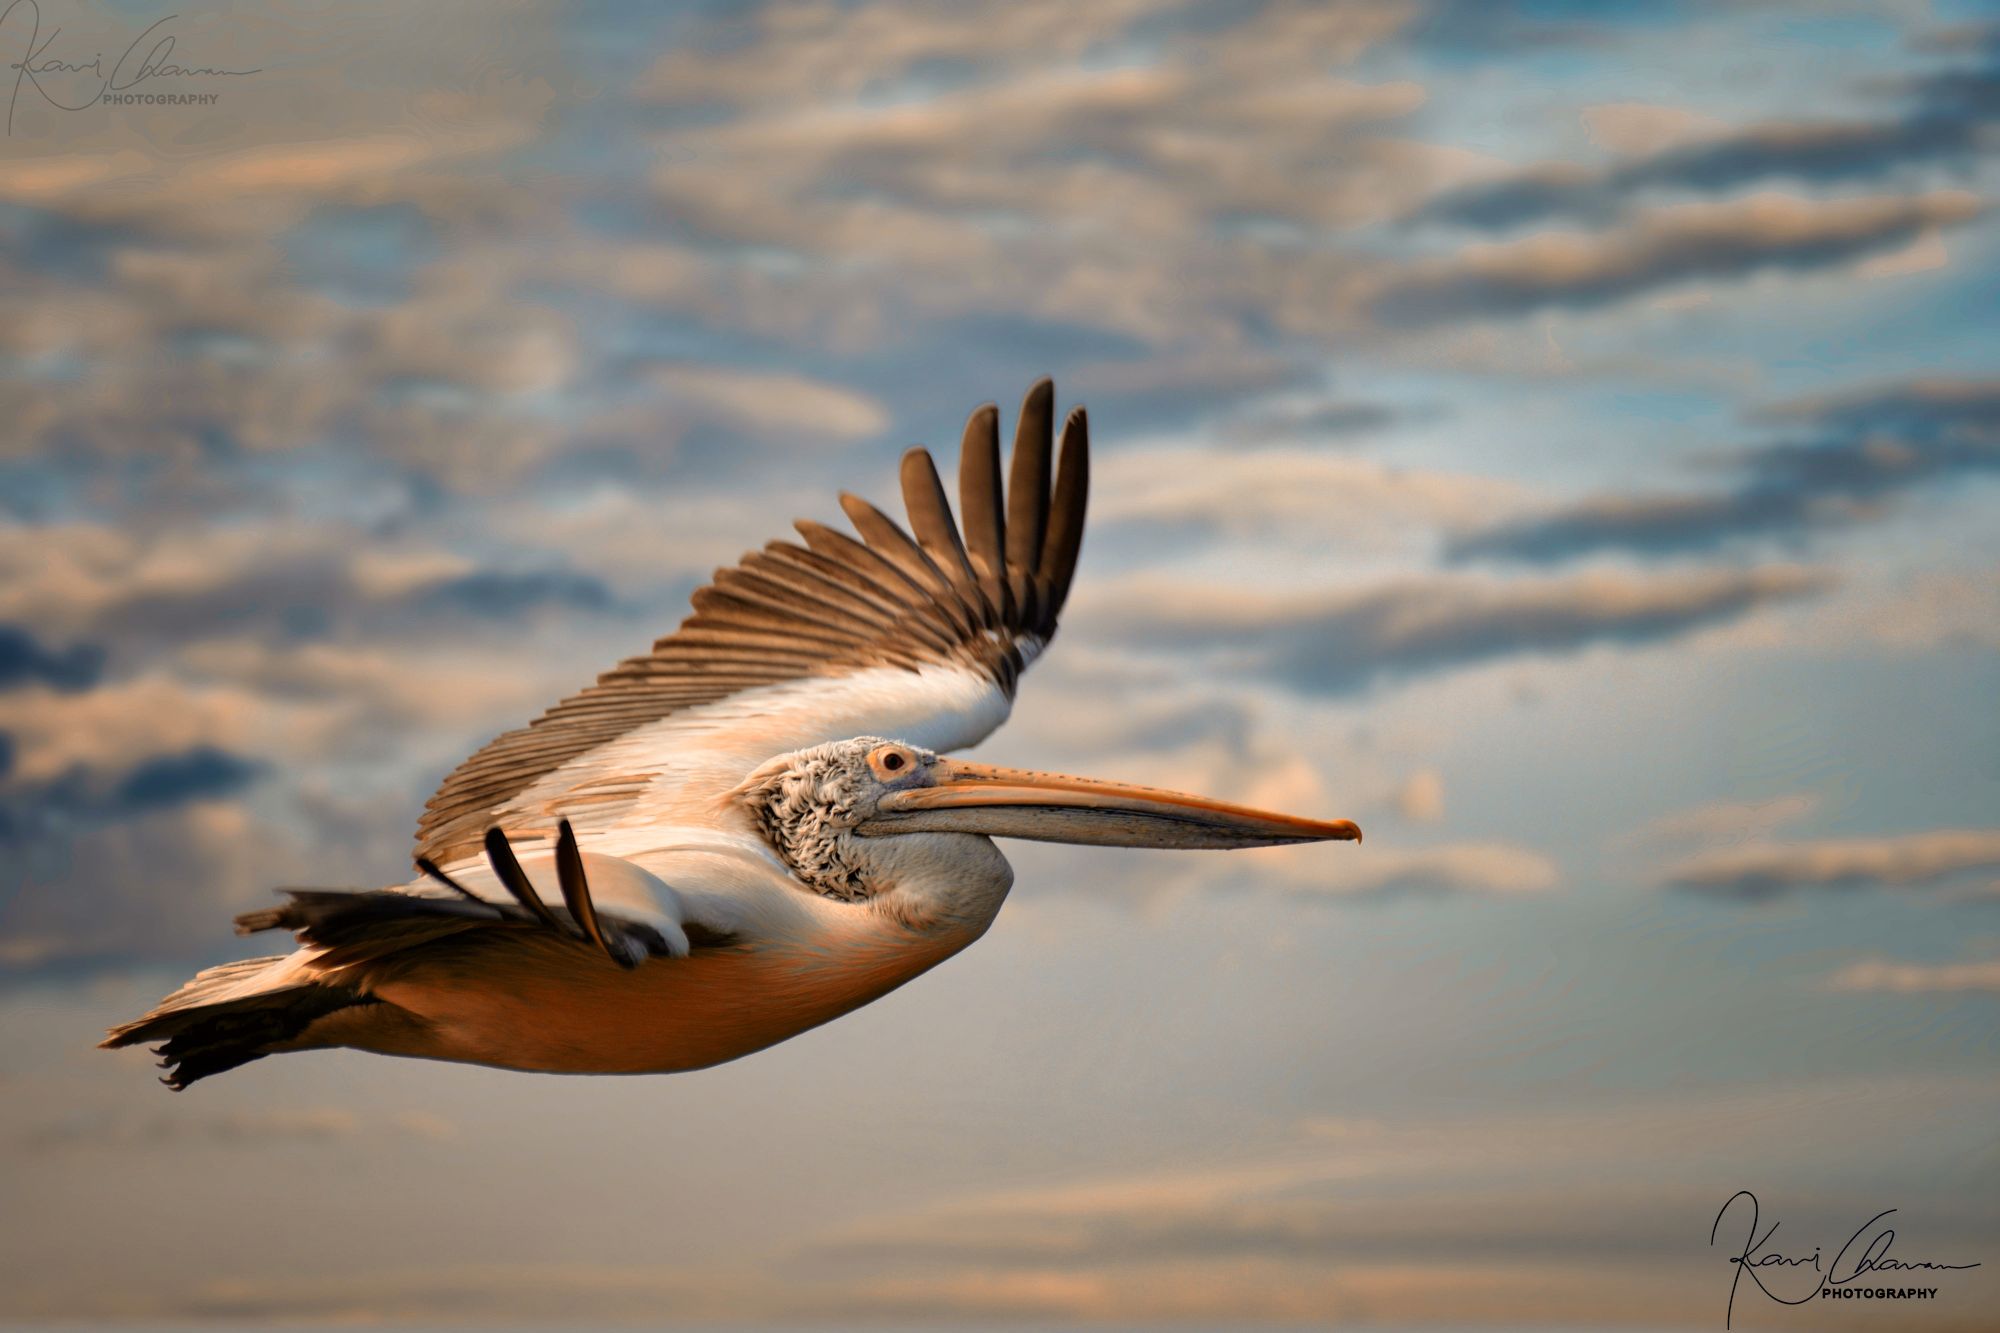 Spot-billed pelican flying high